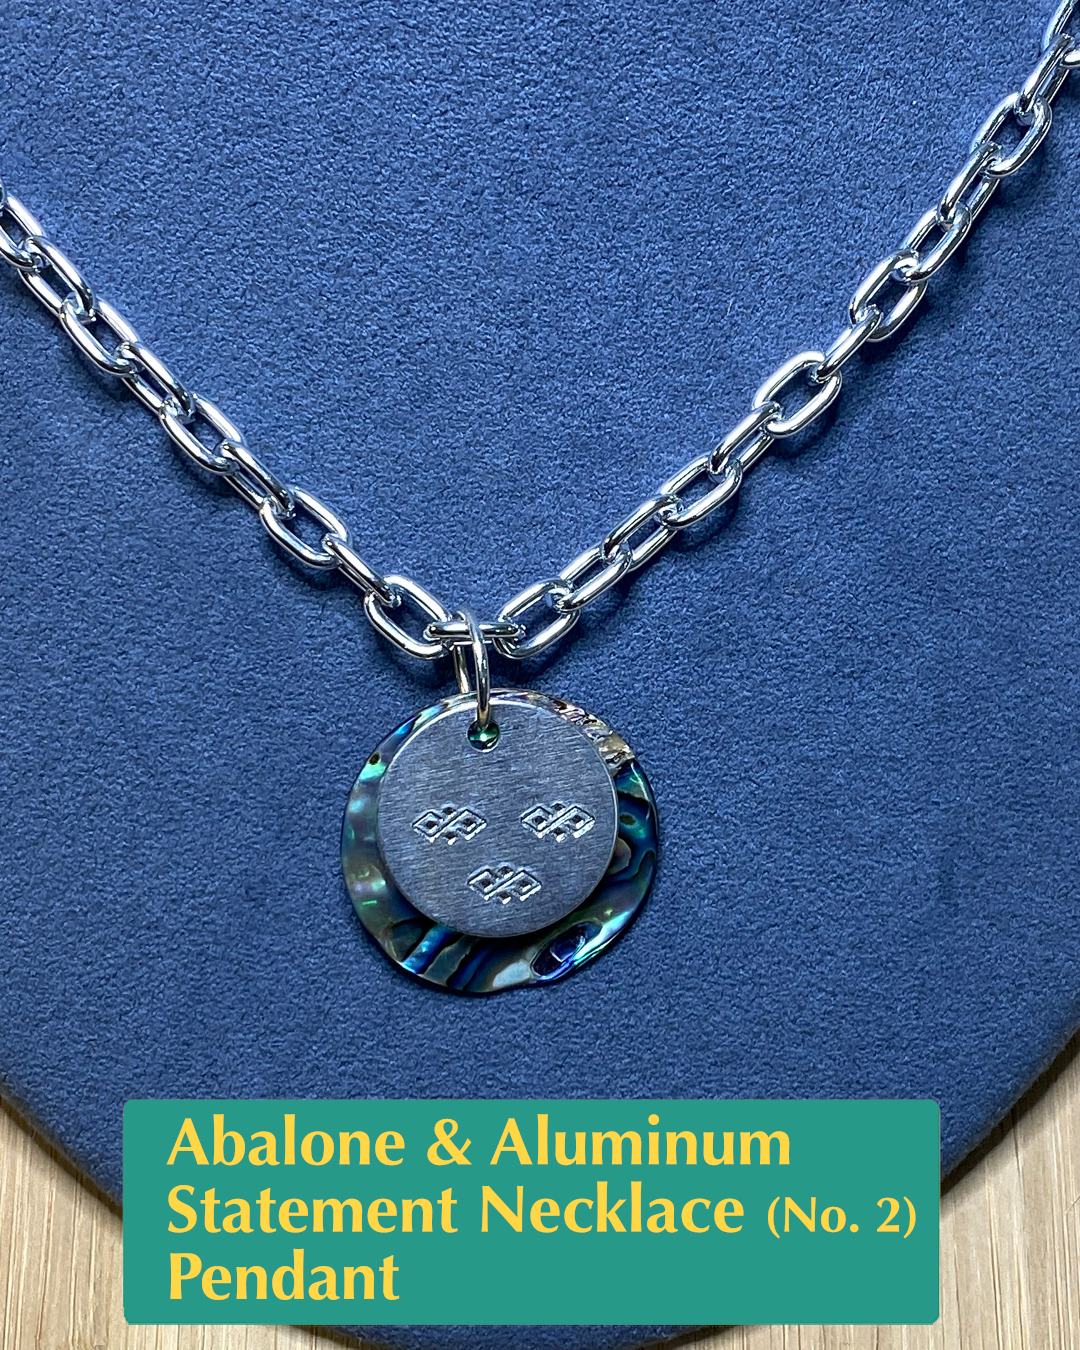 Abalone & Aluminum Statement Necklace No. 2